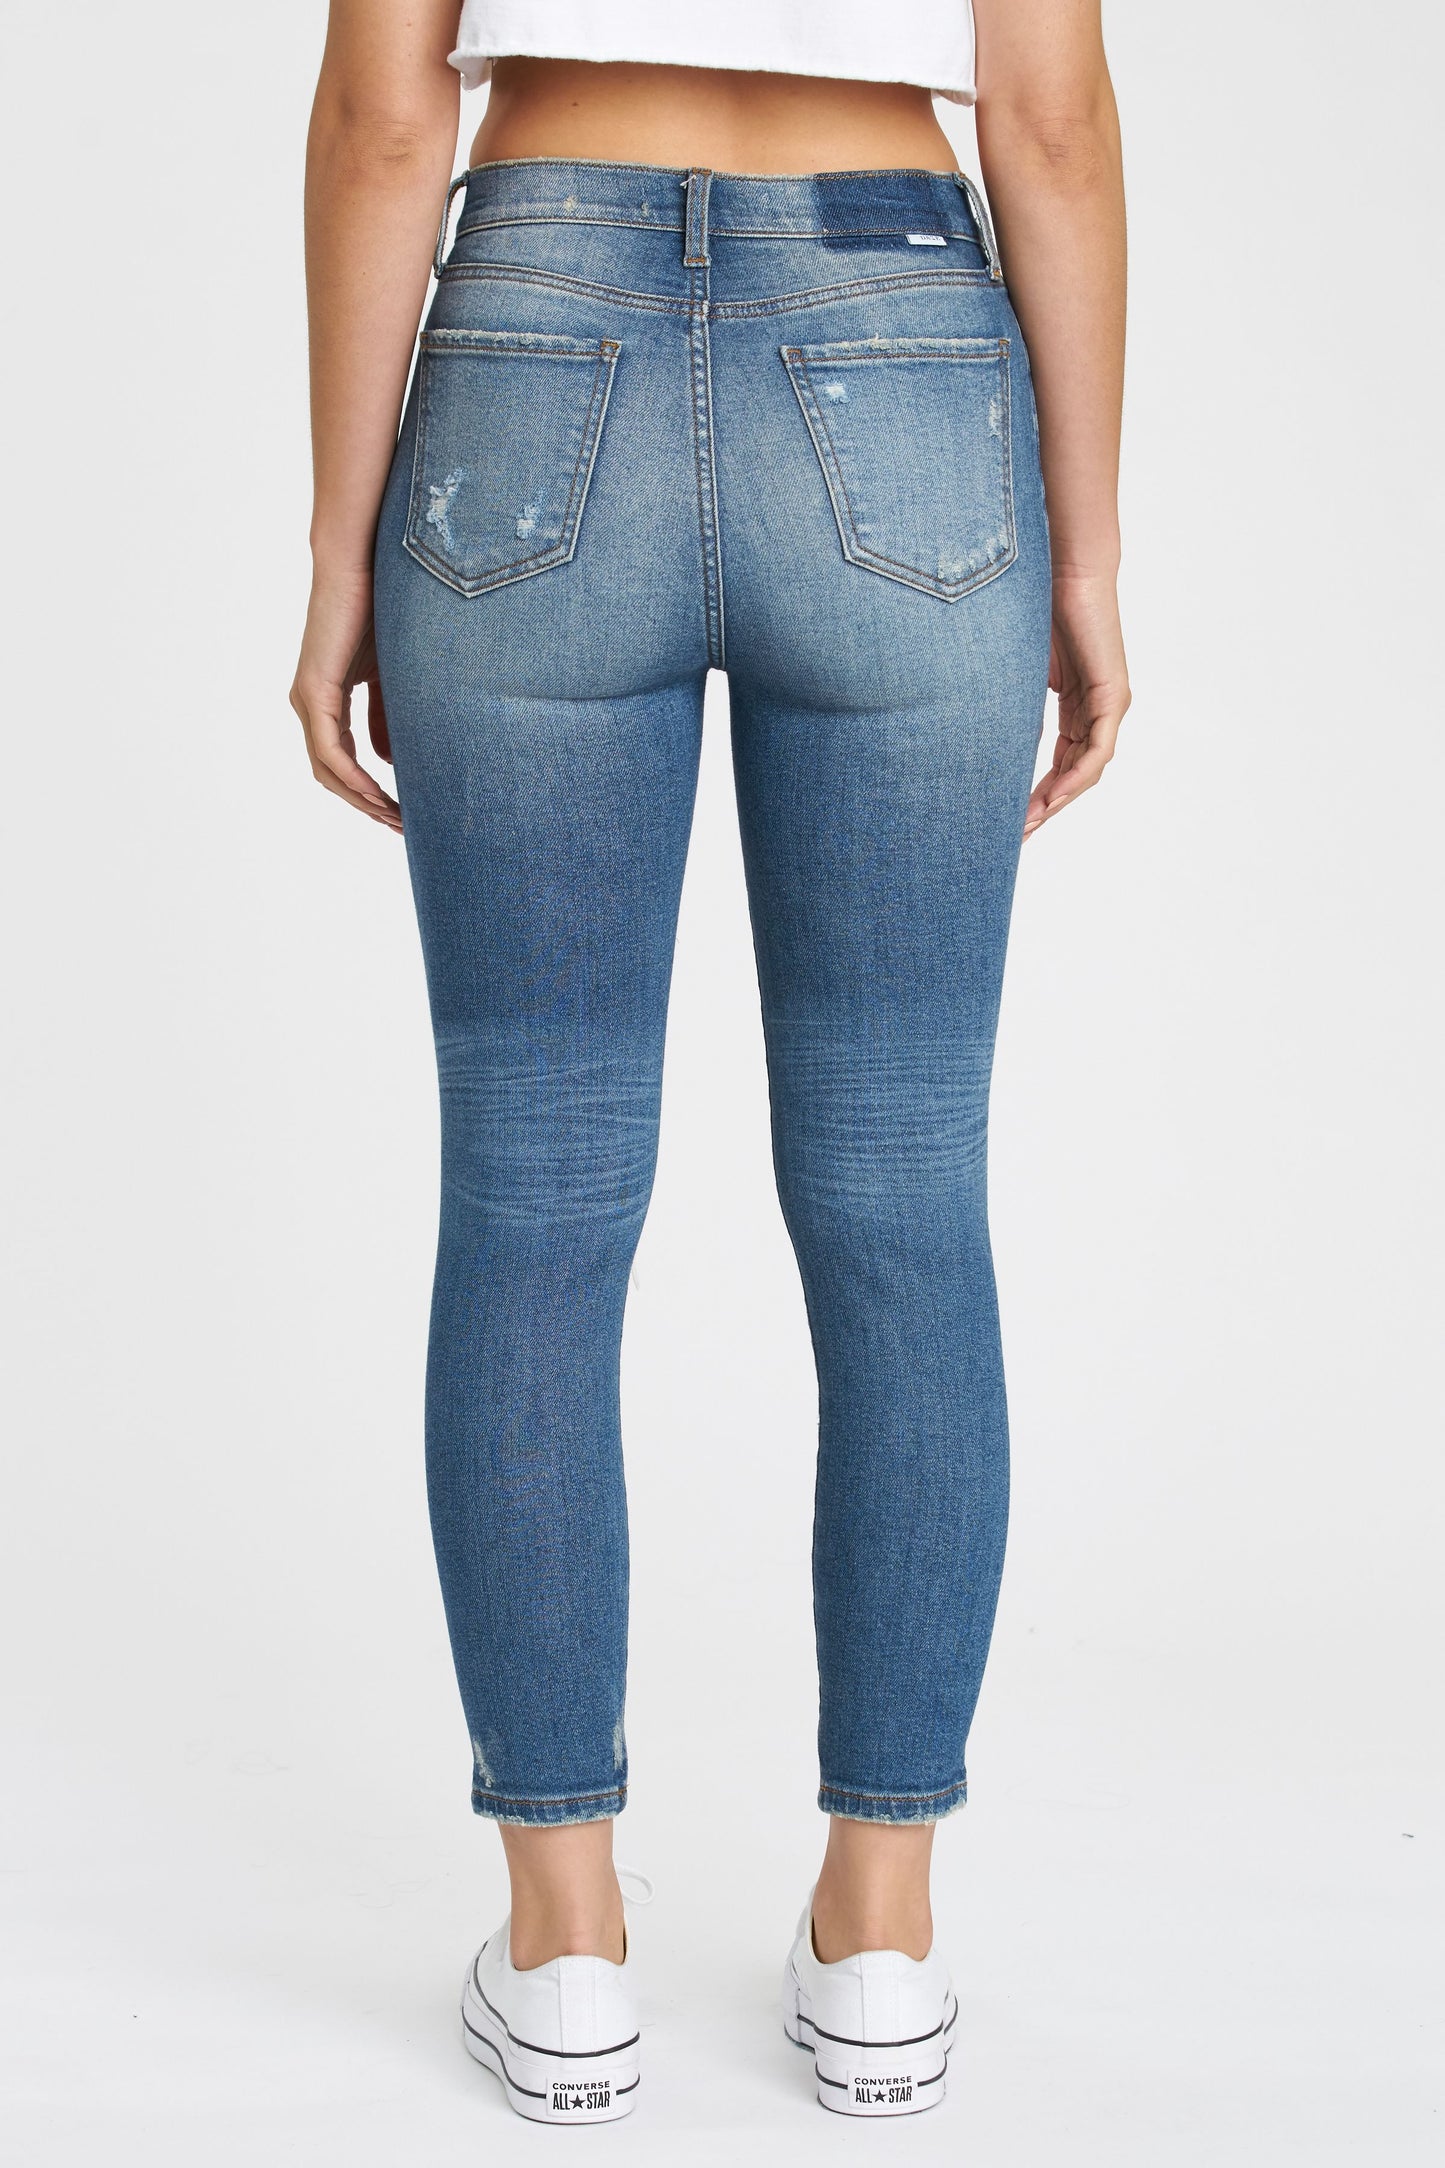 Daze Skinny Vintage Jeans - Denim